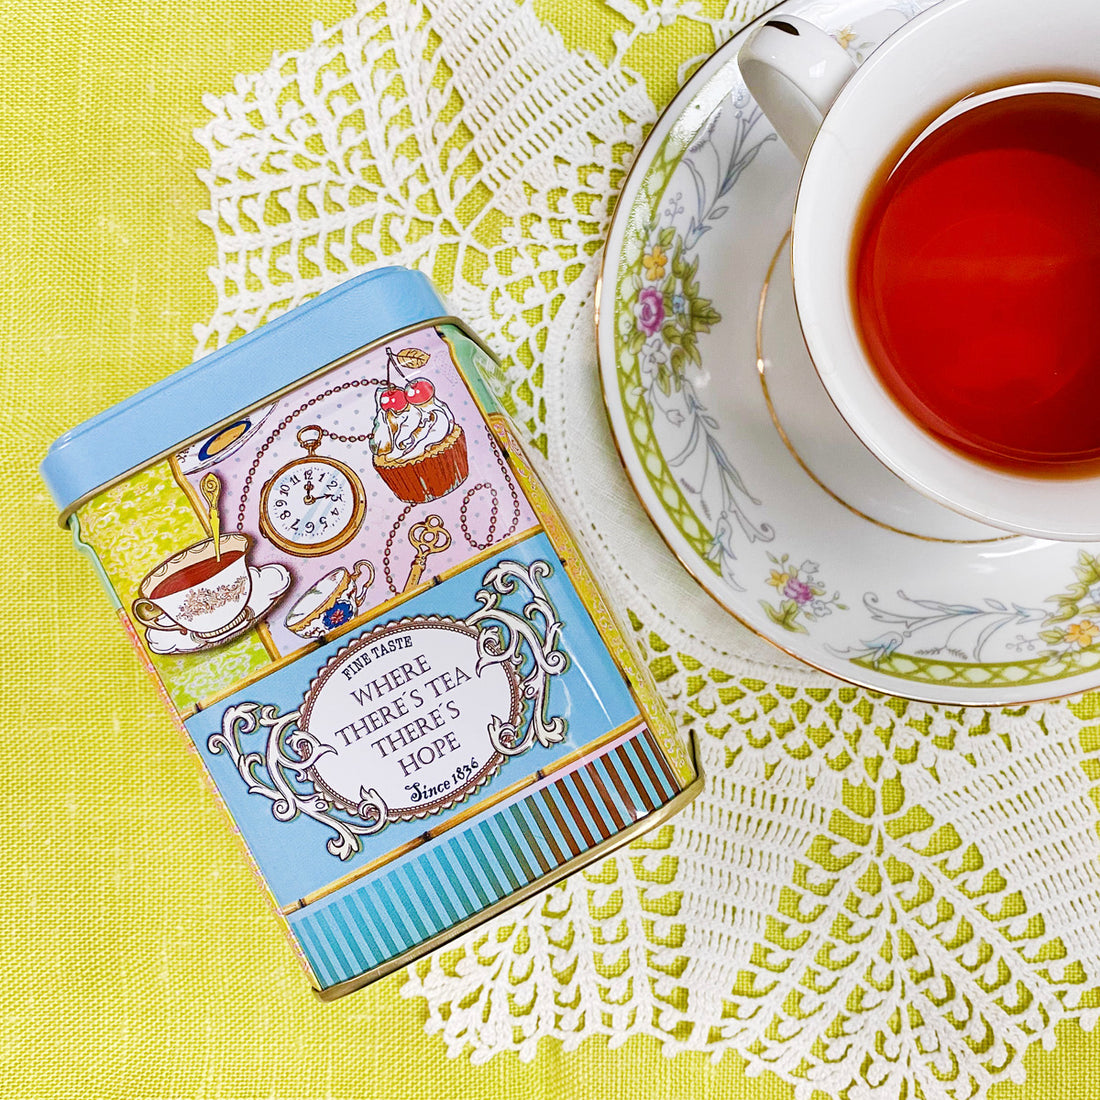 Creative Loose Leaf Tea Storage Ideas to Organize Your Tea Time